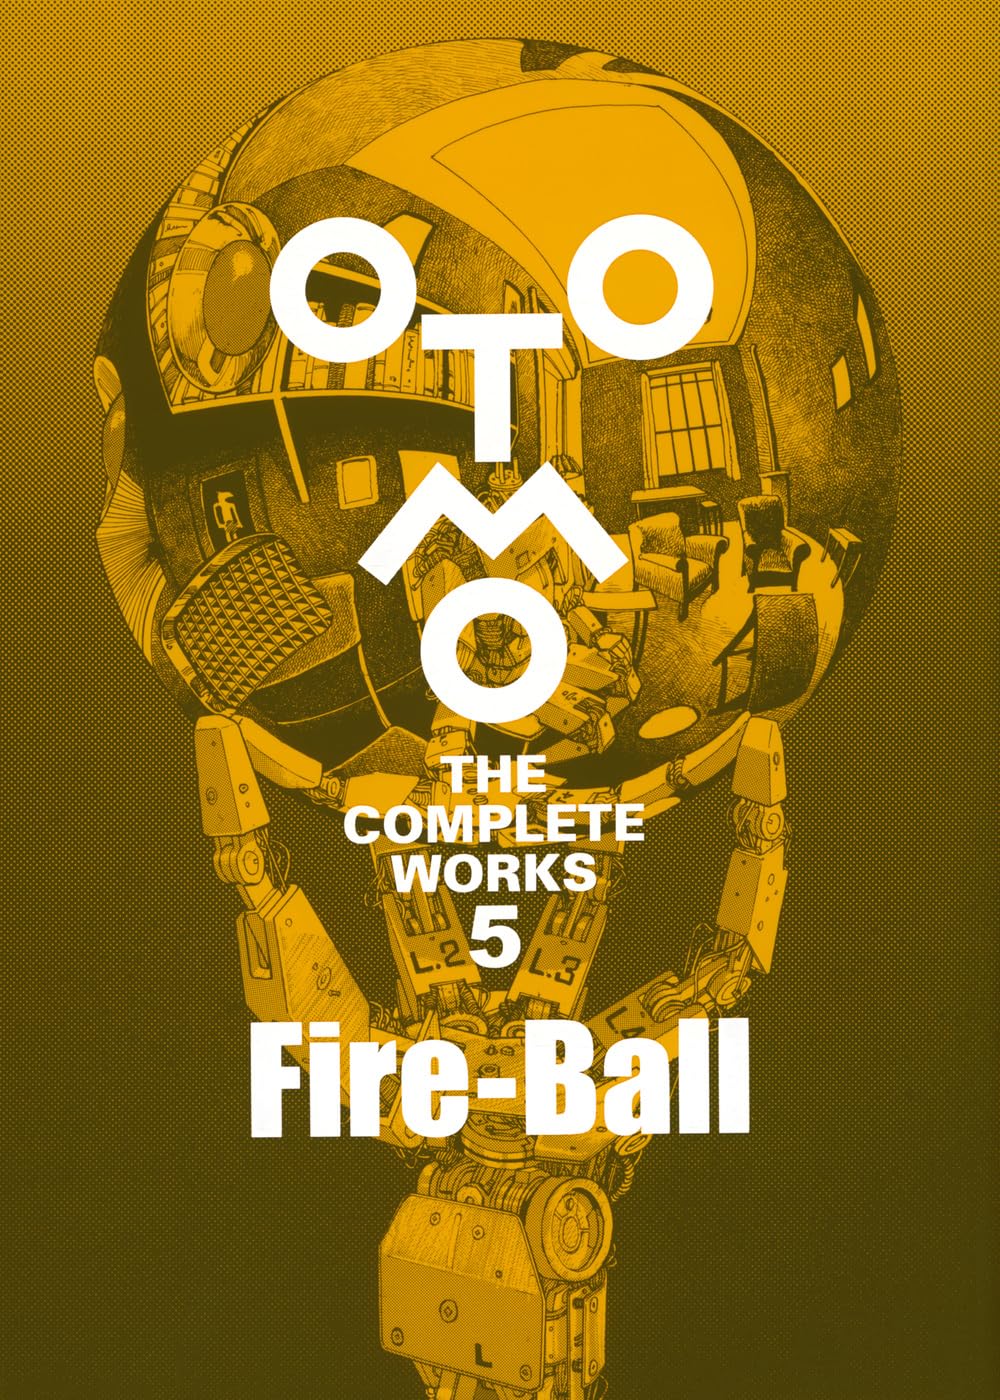 Fire-Ball (OTOMO THE COMPLETE WORKS 5) – Katsuhiro Otomo